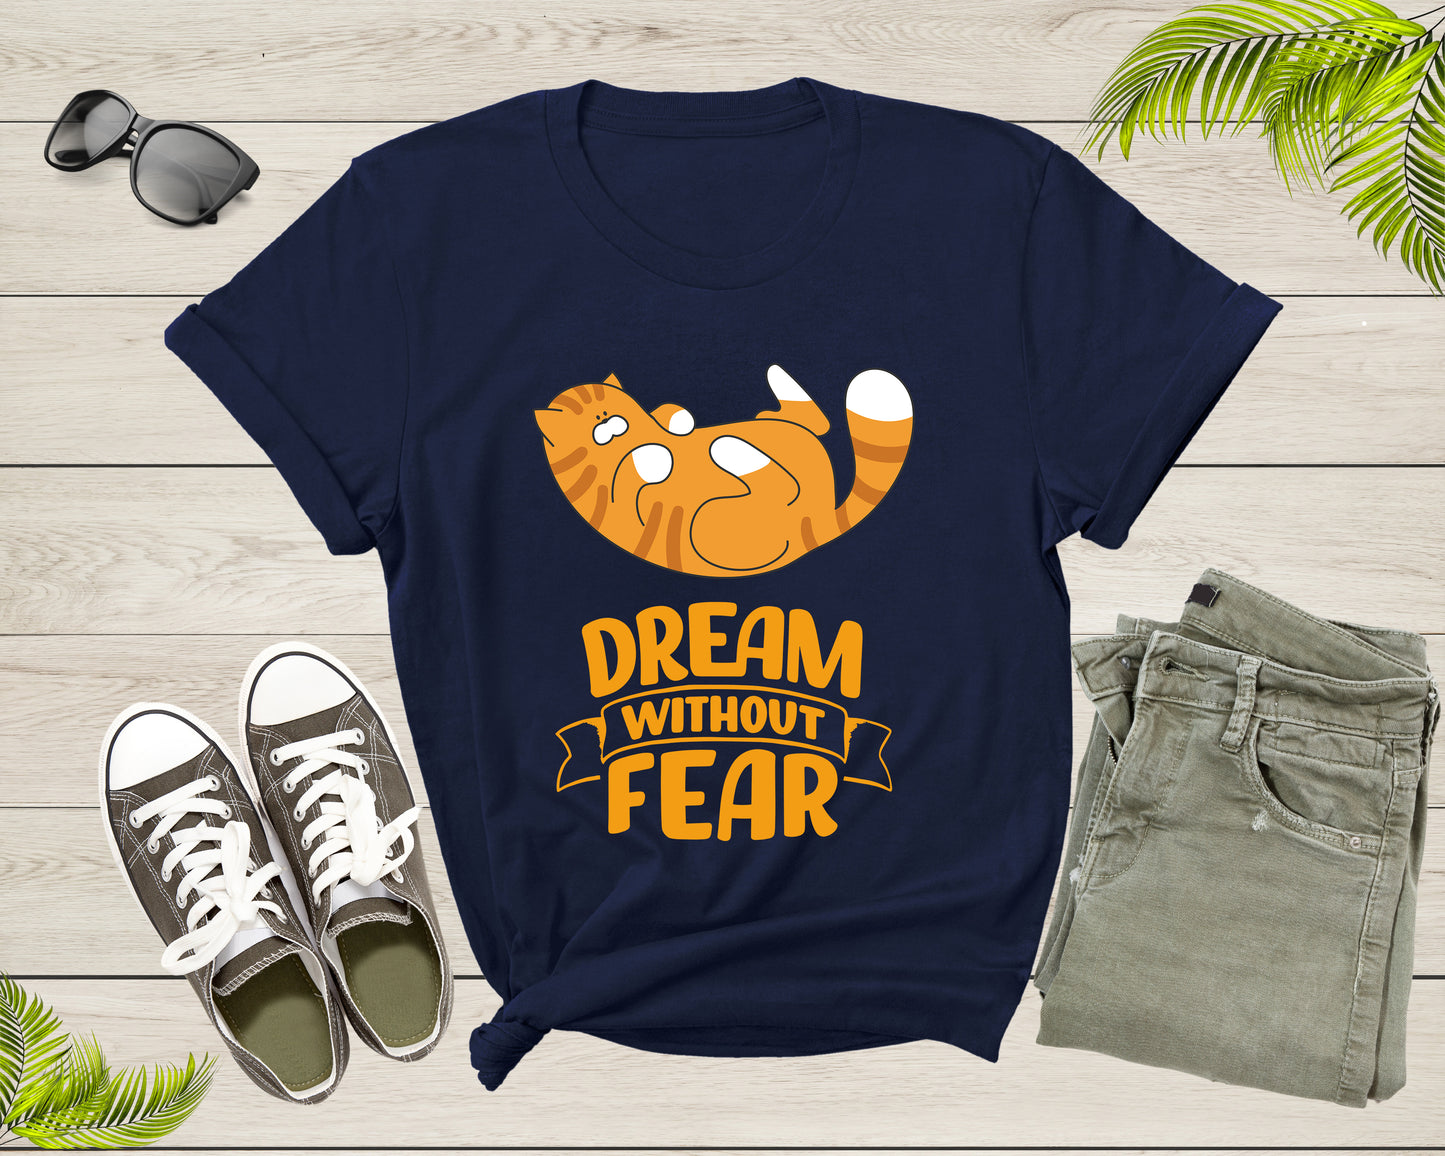 Dream without Fear Funny Cool Yellow Cat Kitten Animal T-Shirt Cat Kitten Lover Gift T Shirt for Men Women Kids Boys Girls Graphic Tshirt